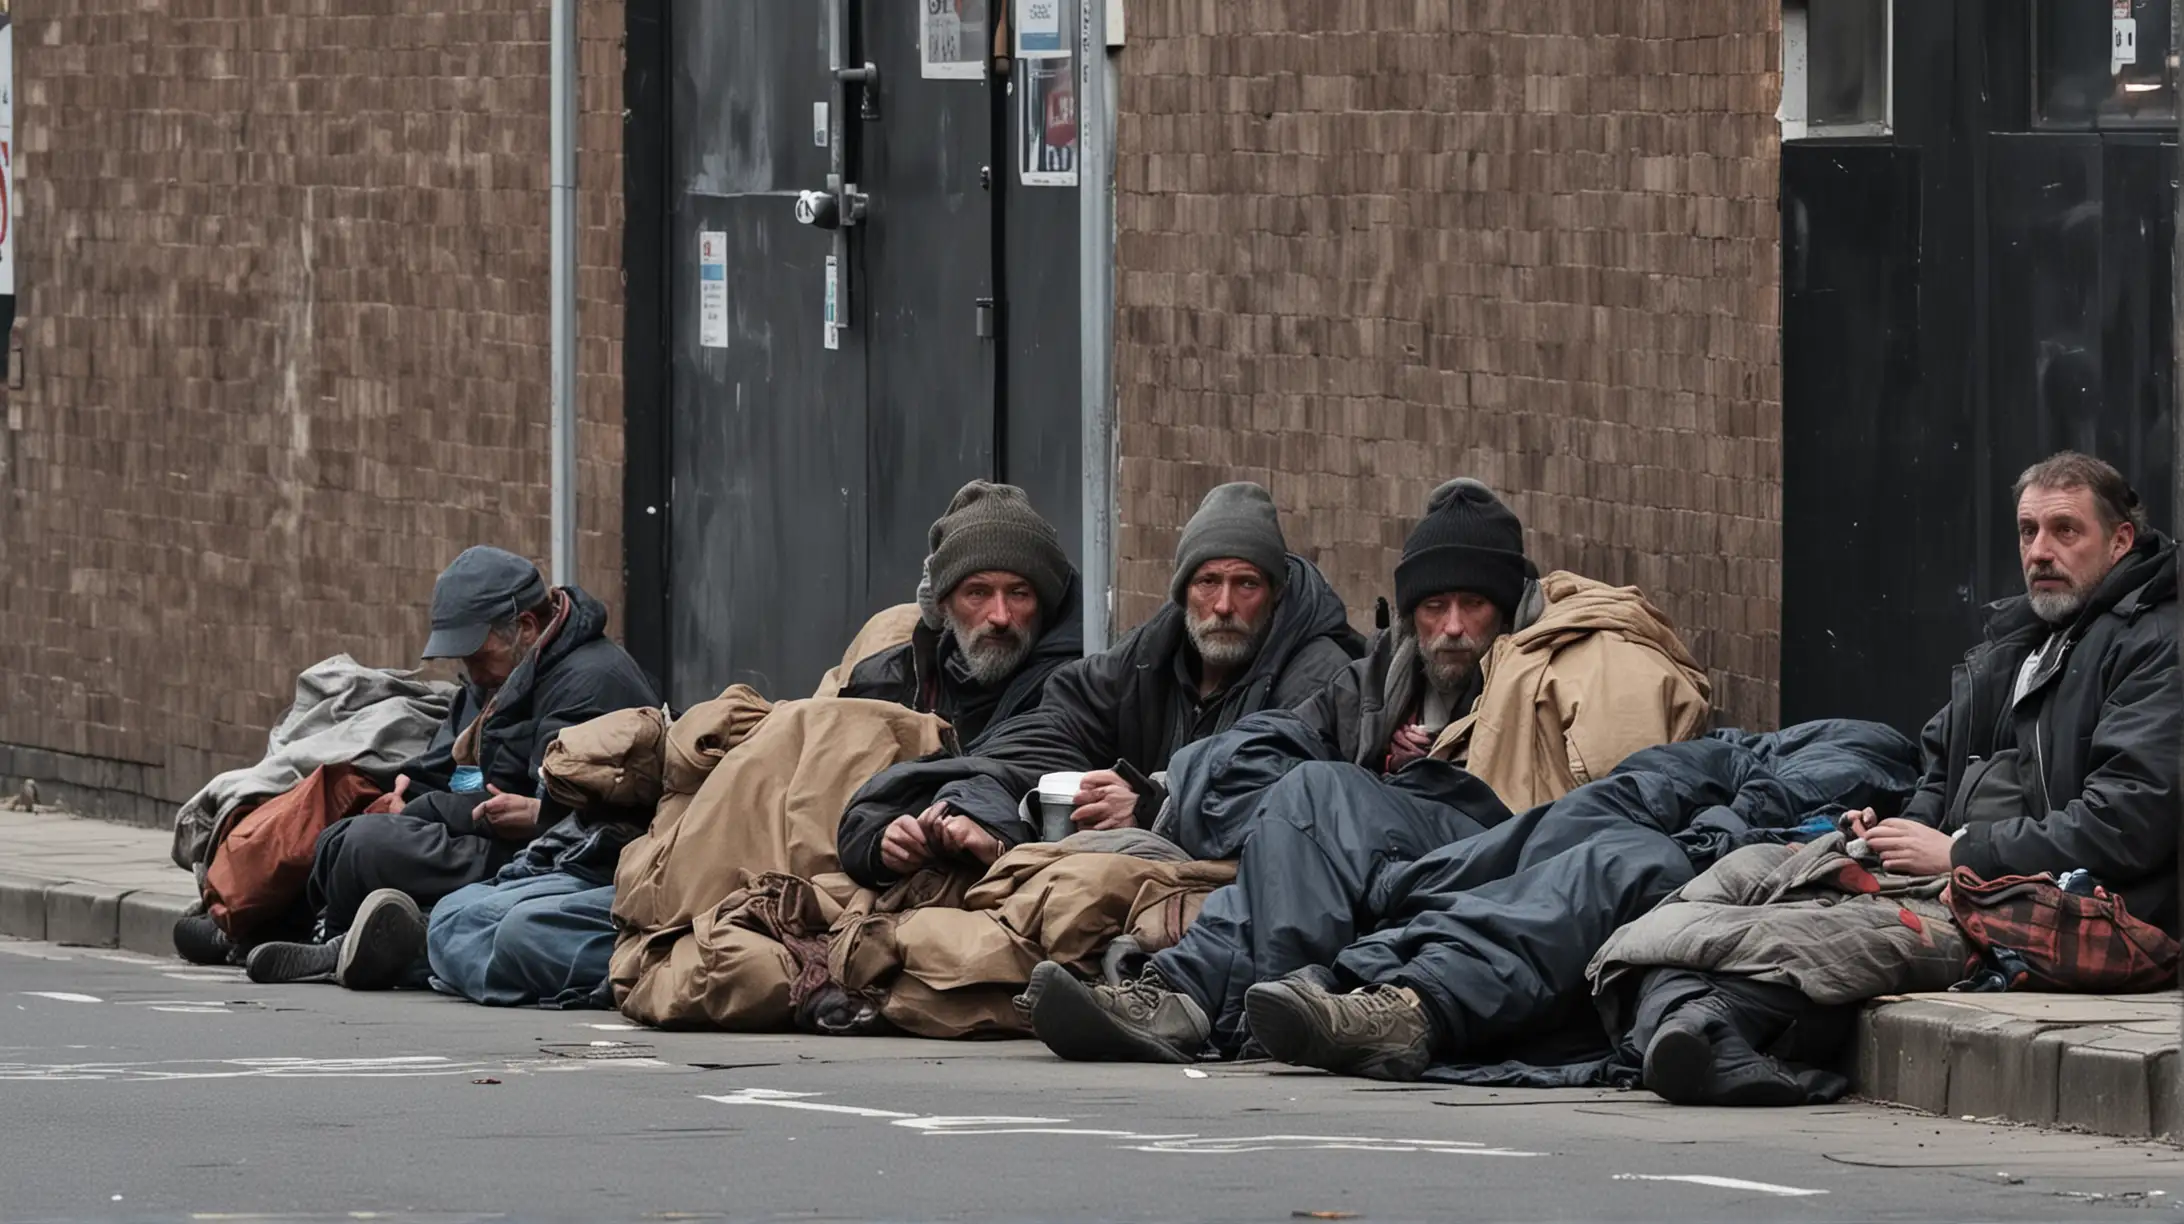 group of homeless people on UK street